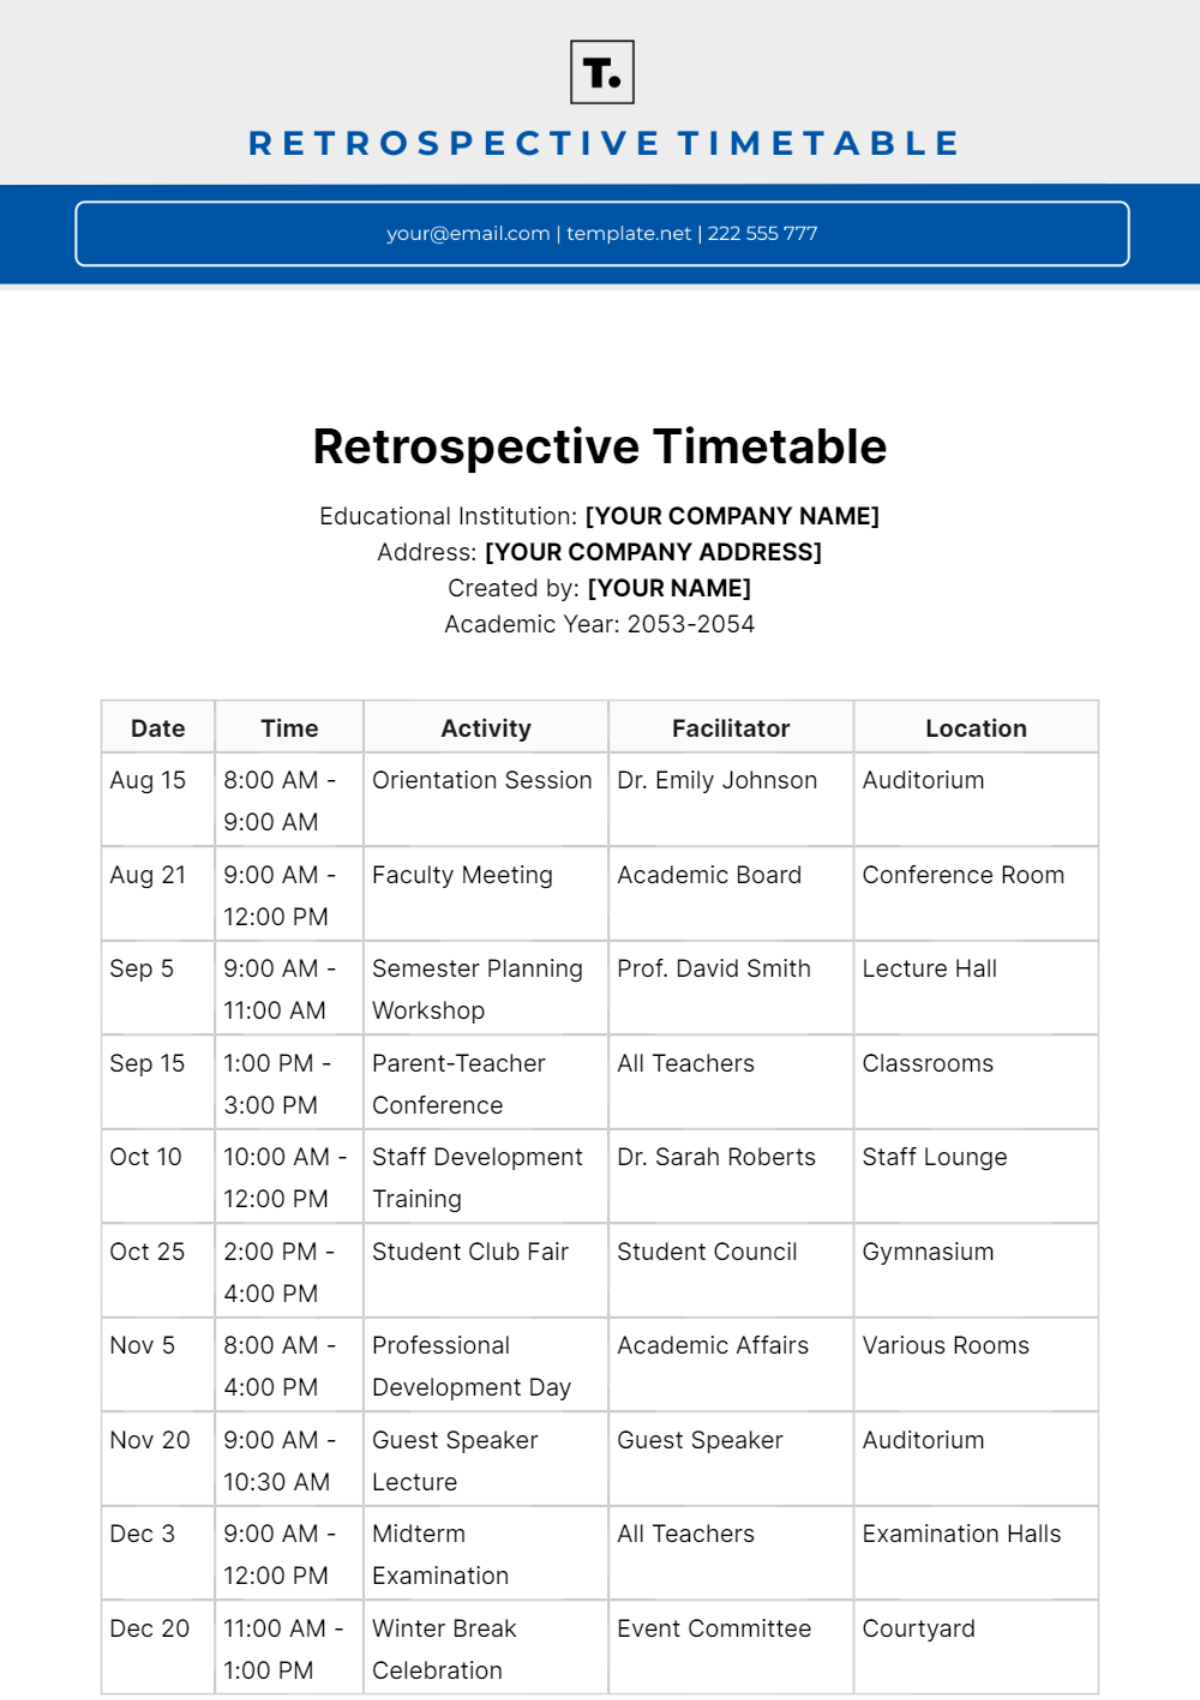 Free Retrospective Timetable Template